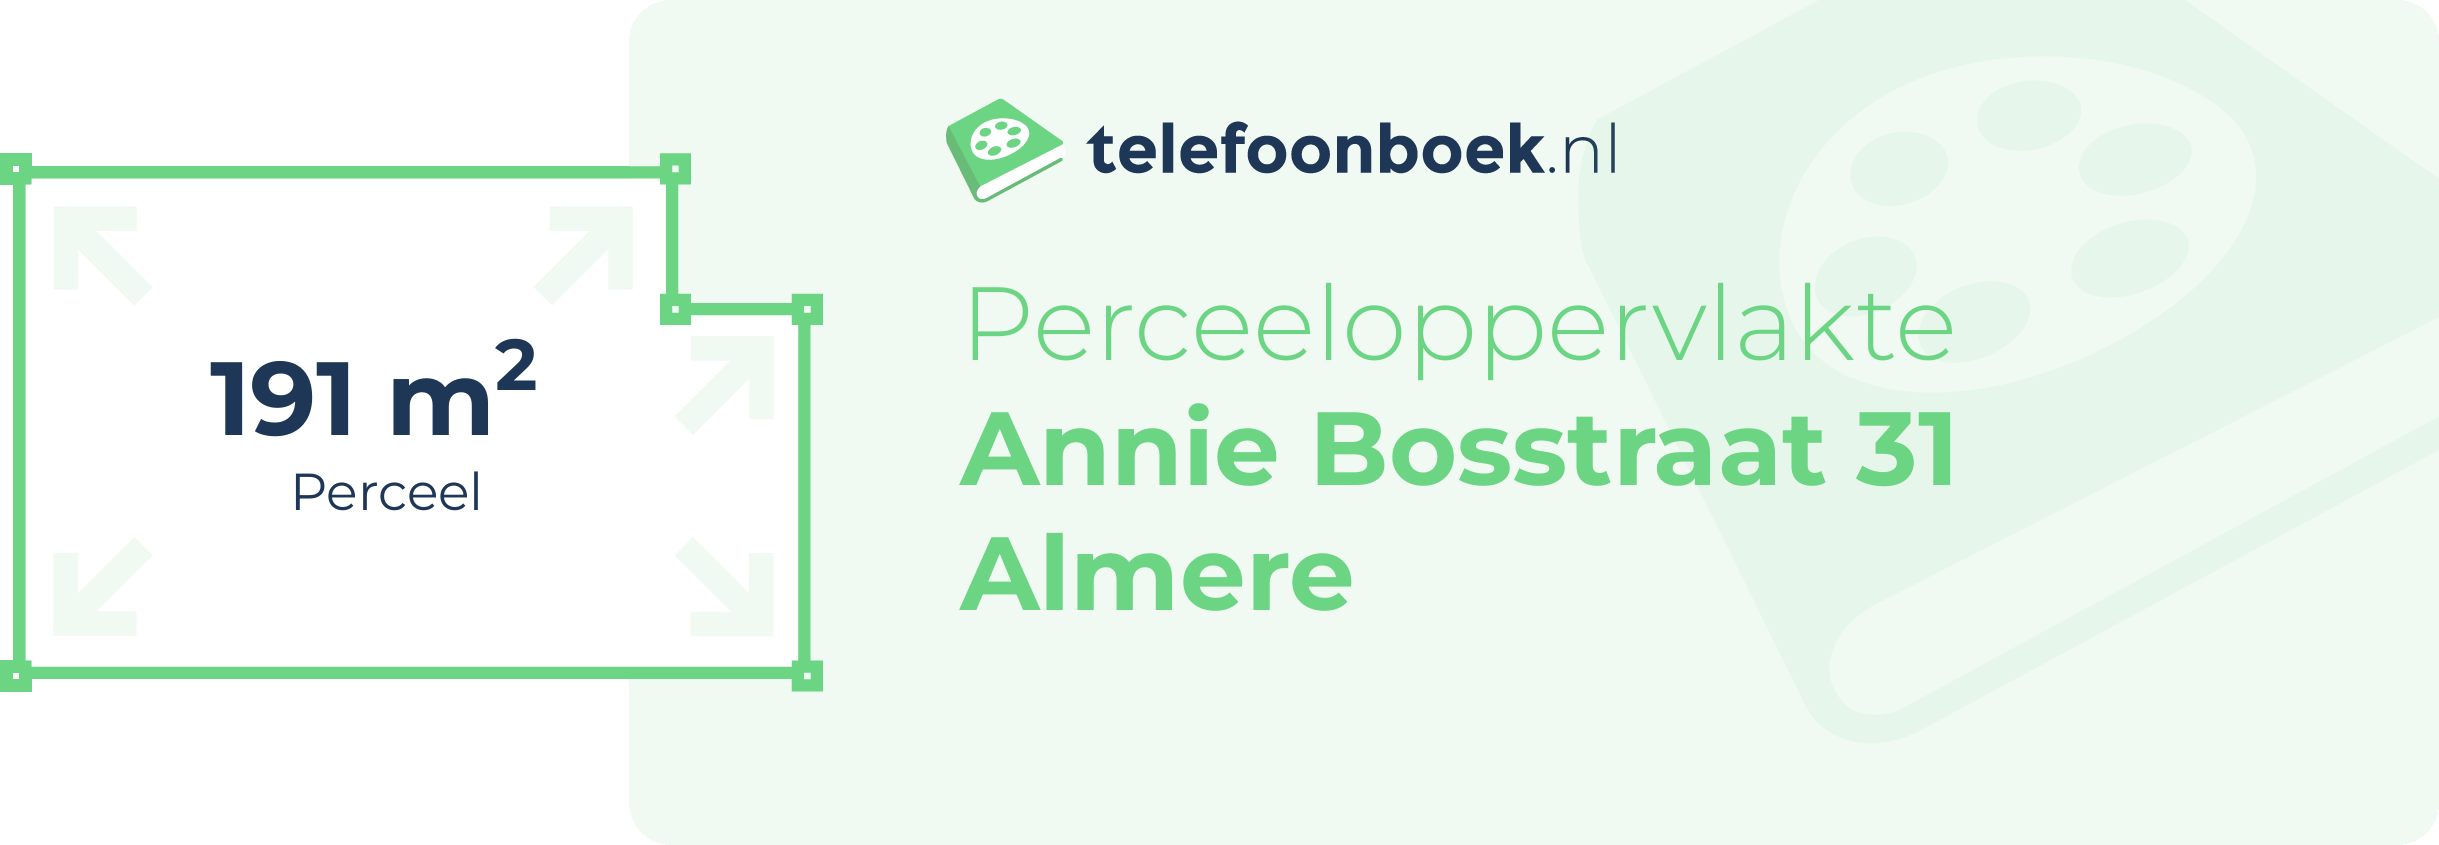 Perceeloppervlakte Annie Bosstraat 31 Almere